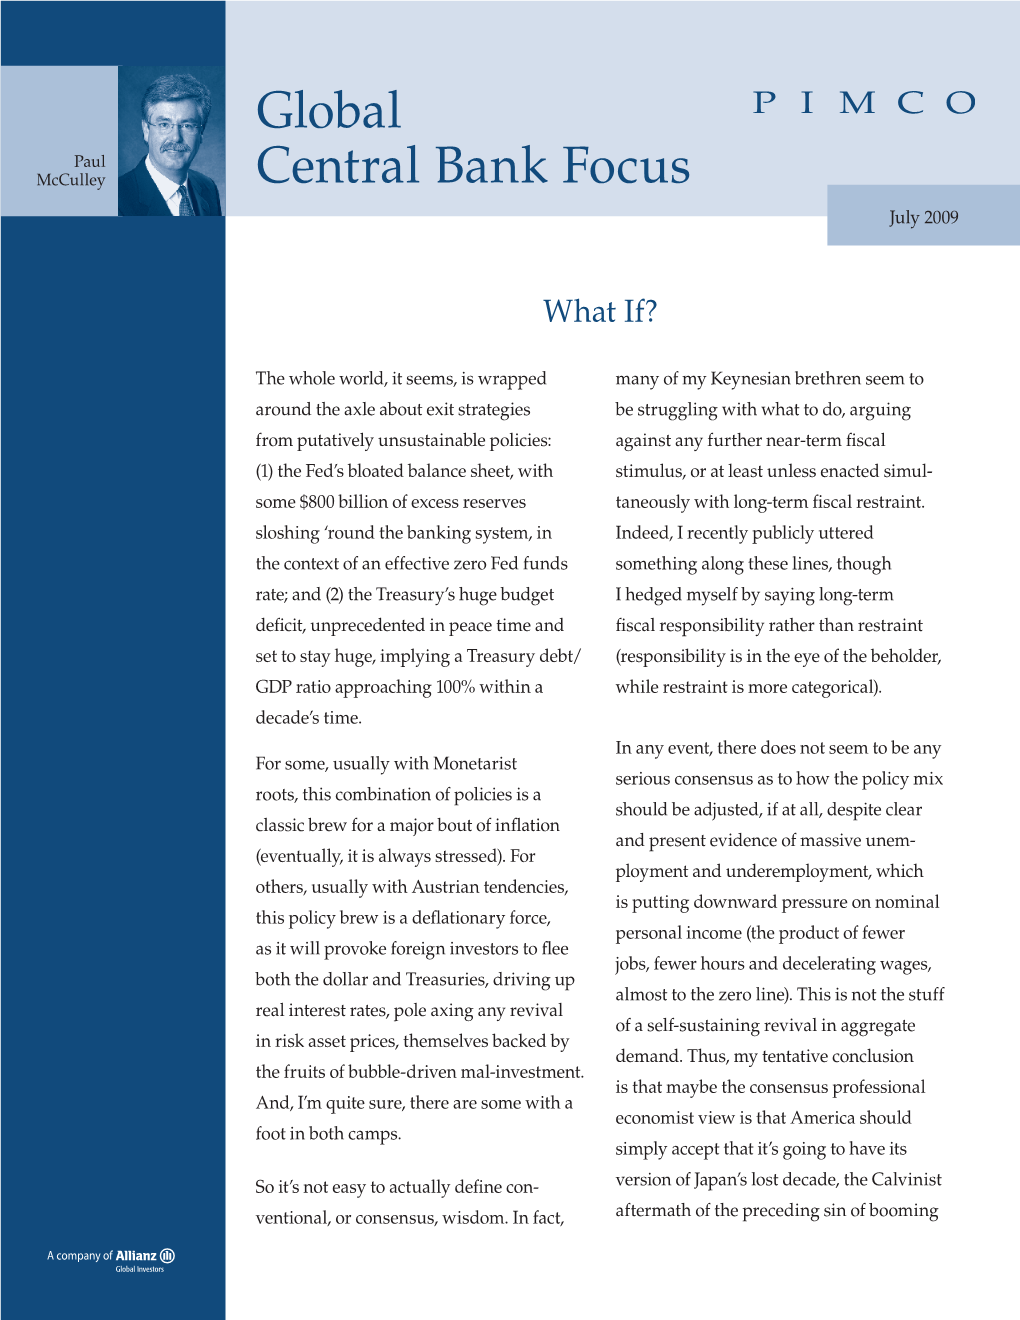 Global Central Bank Focus